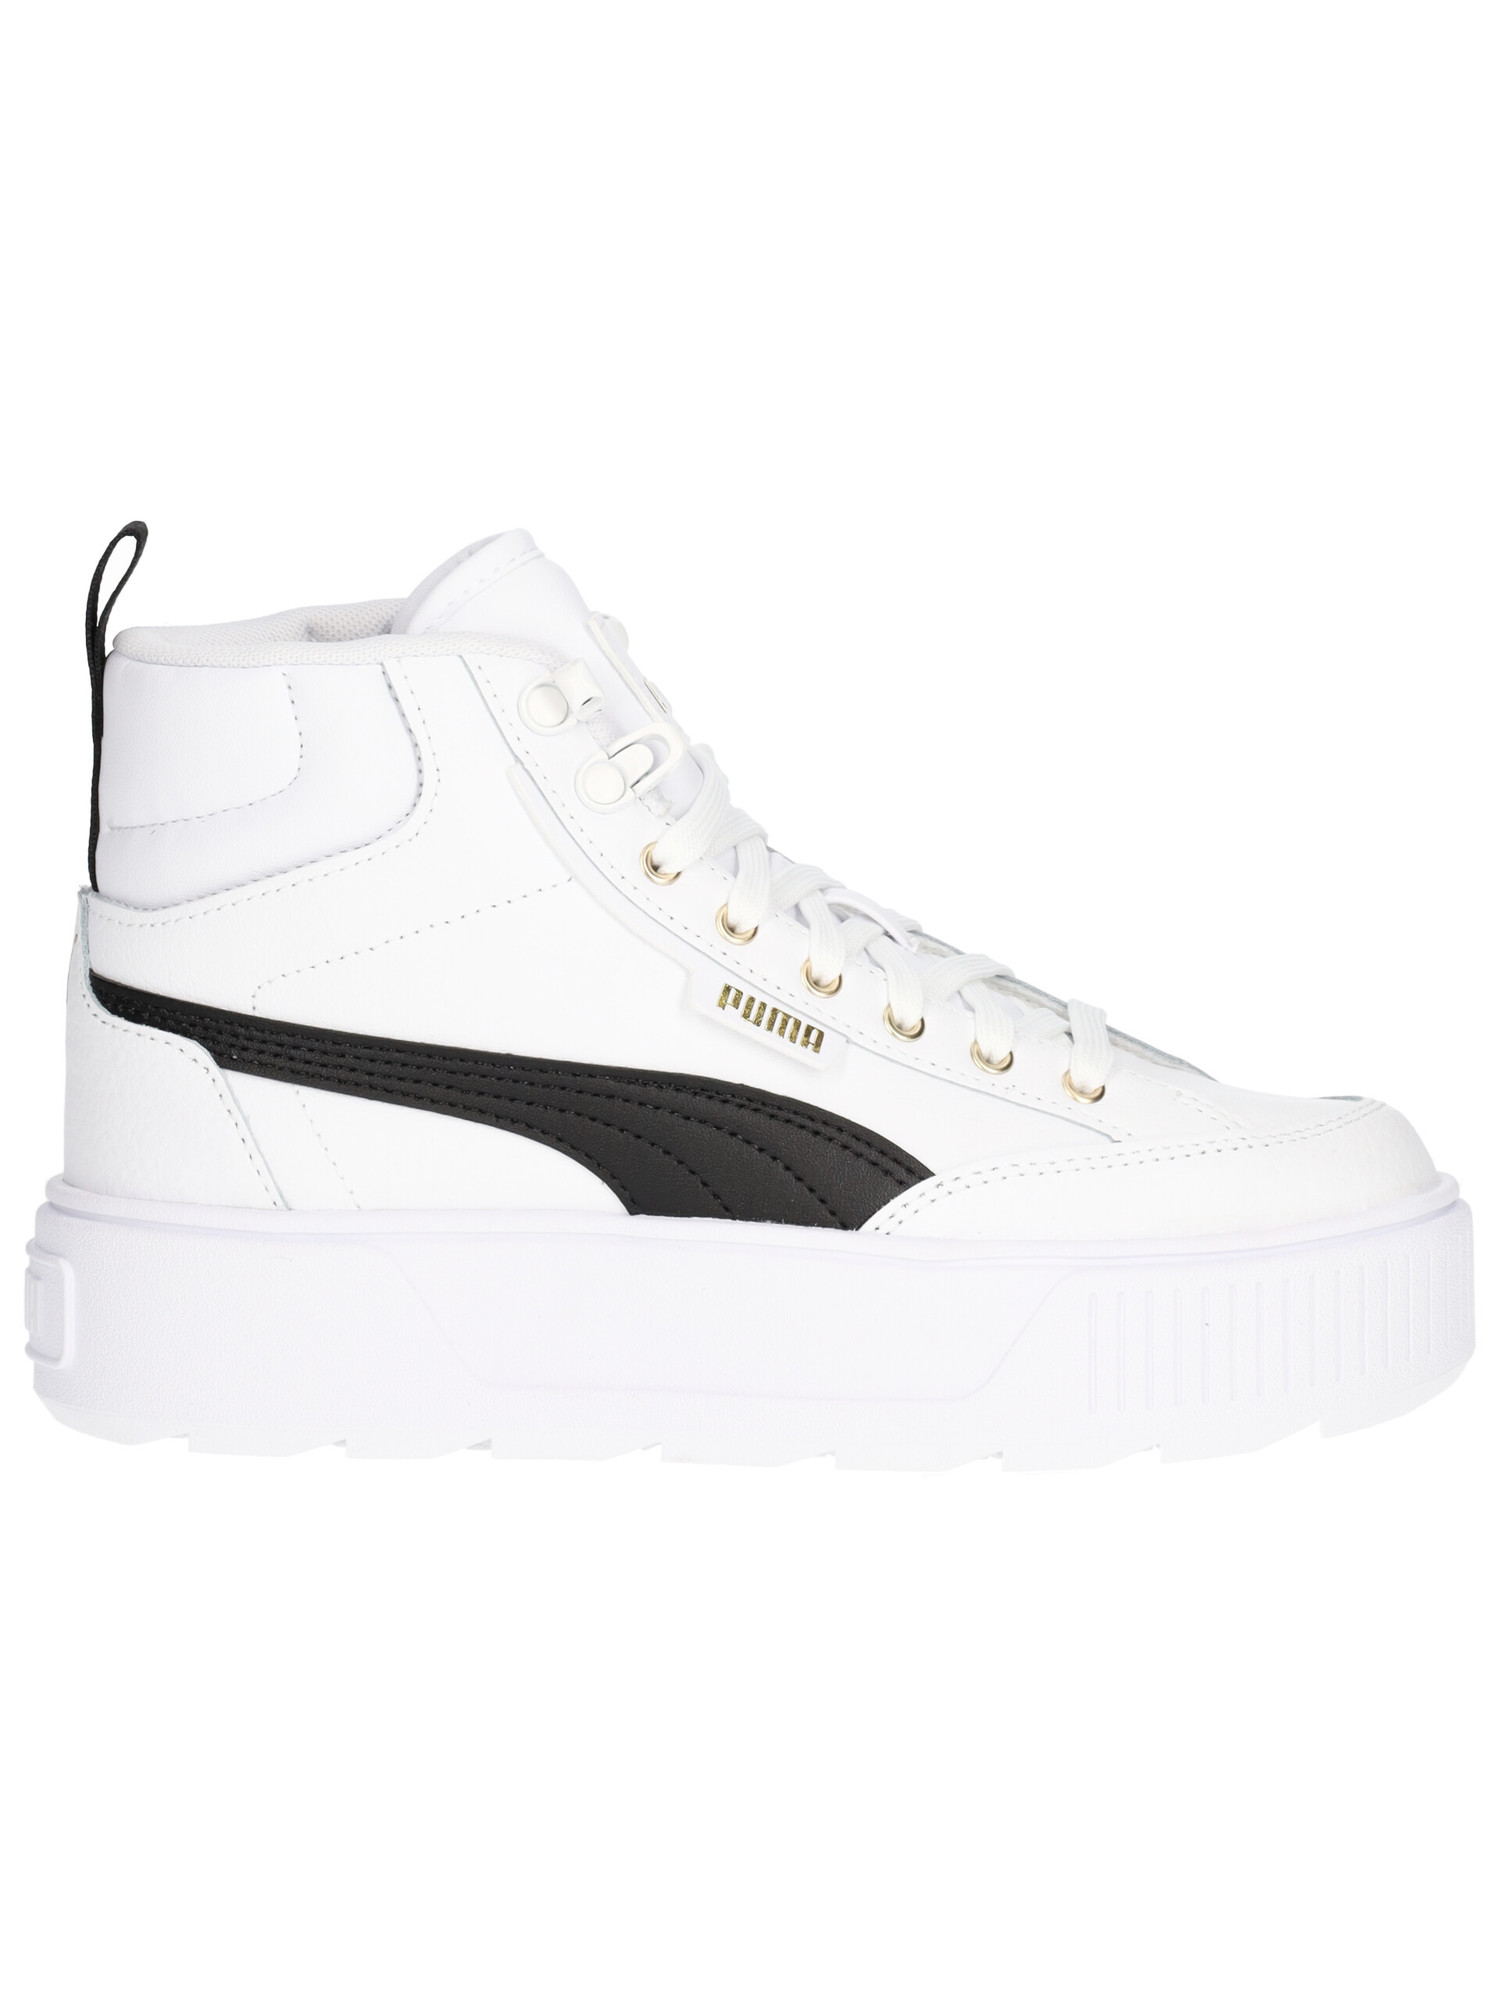 sneaker-platform-puma-karmen-da-donna-bianca-069f3b